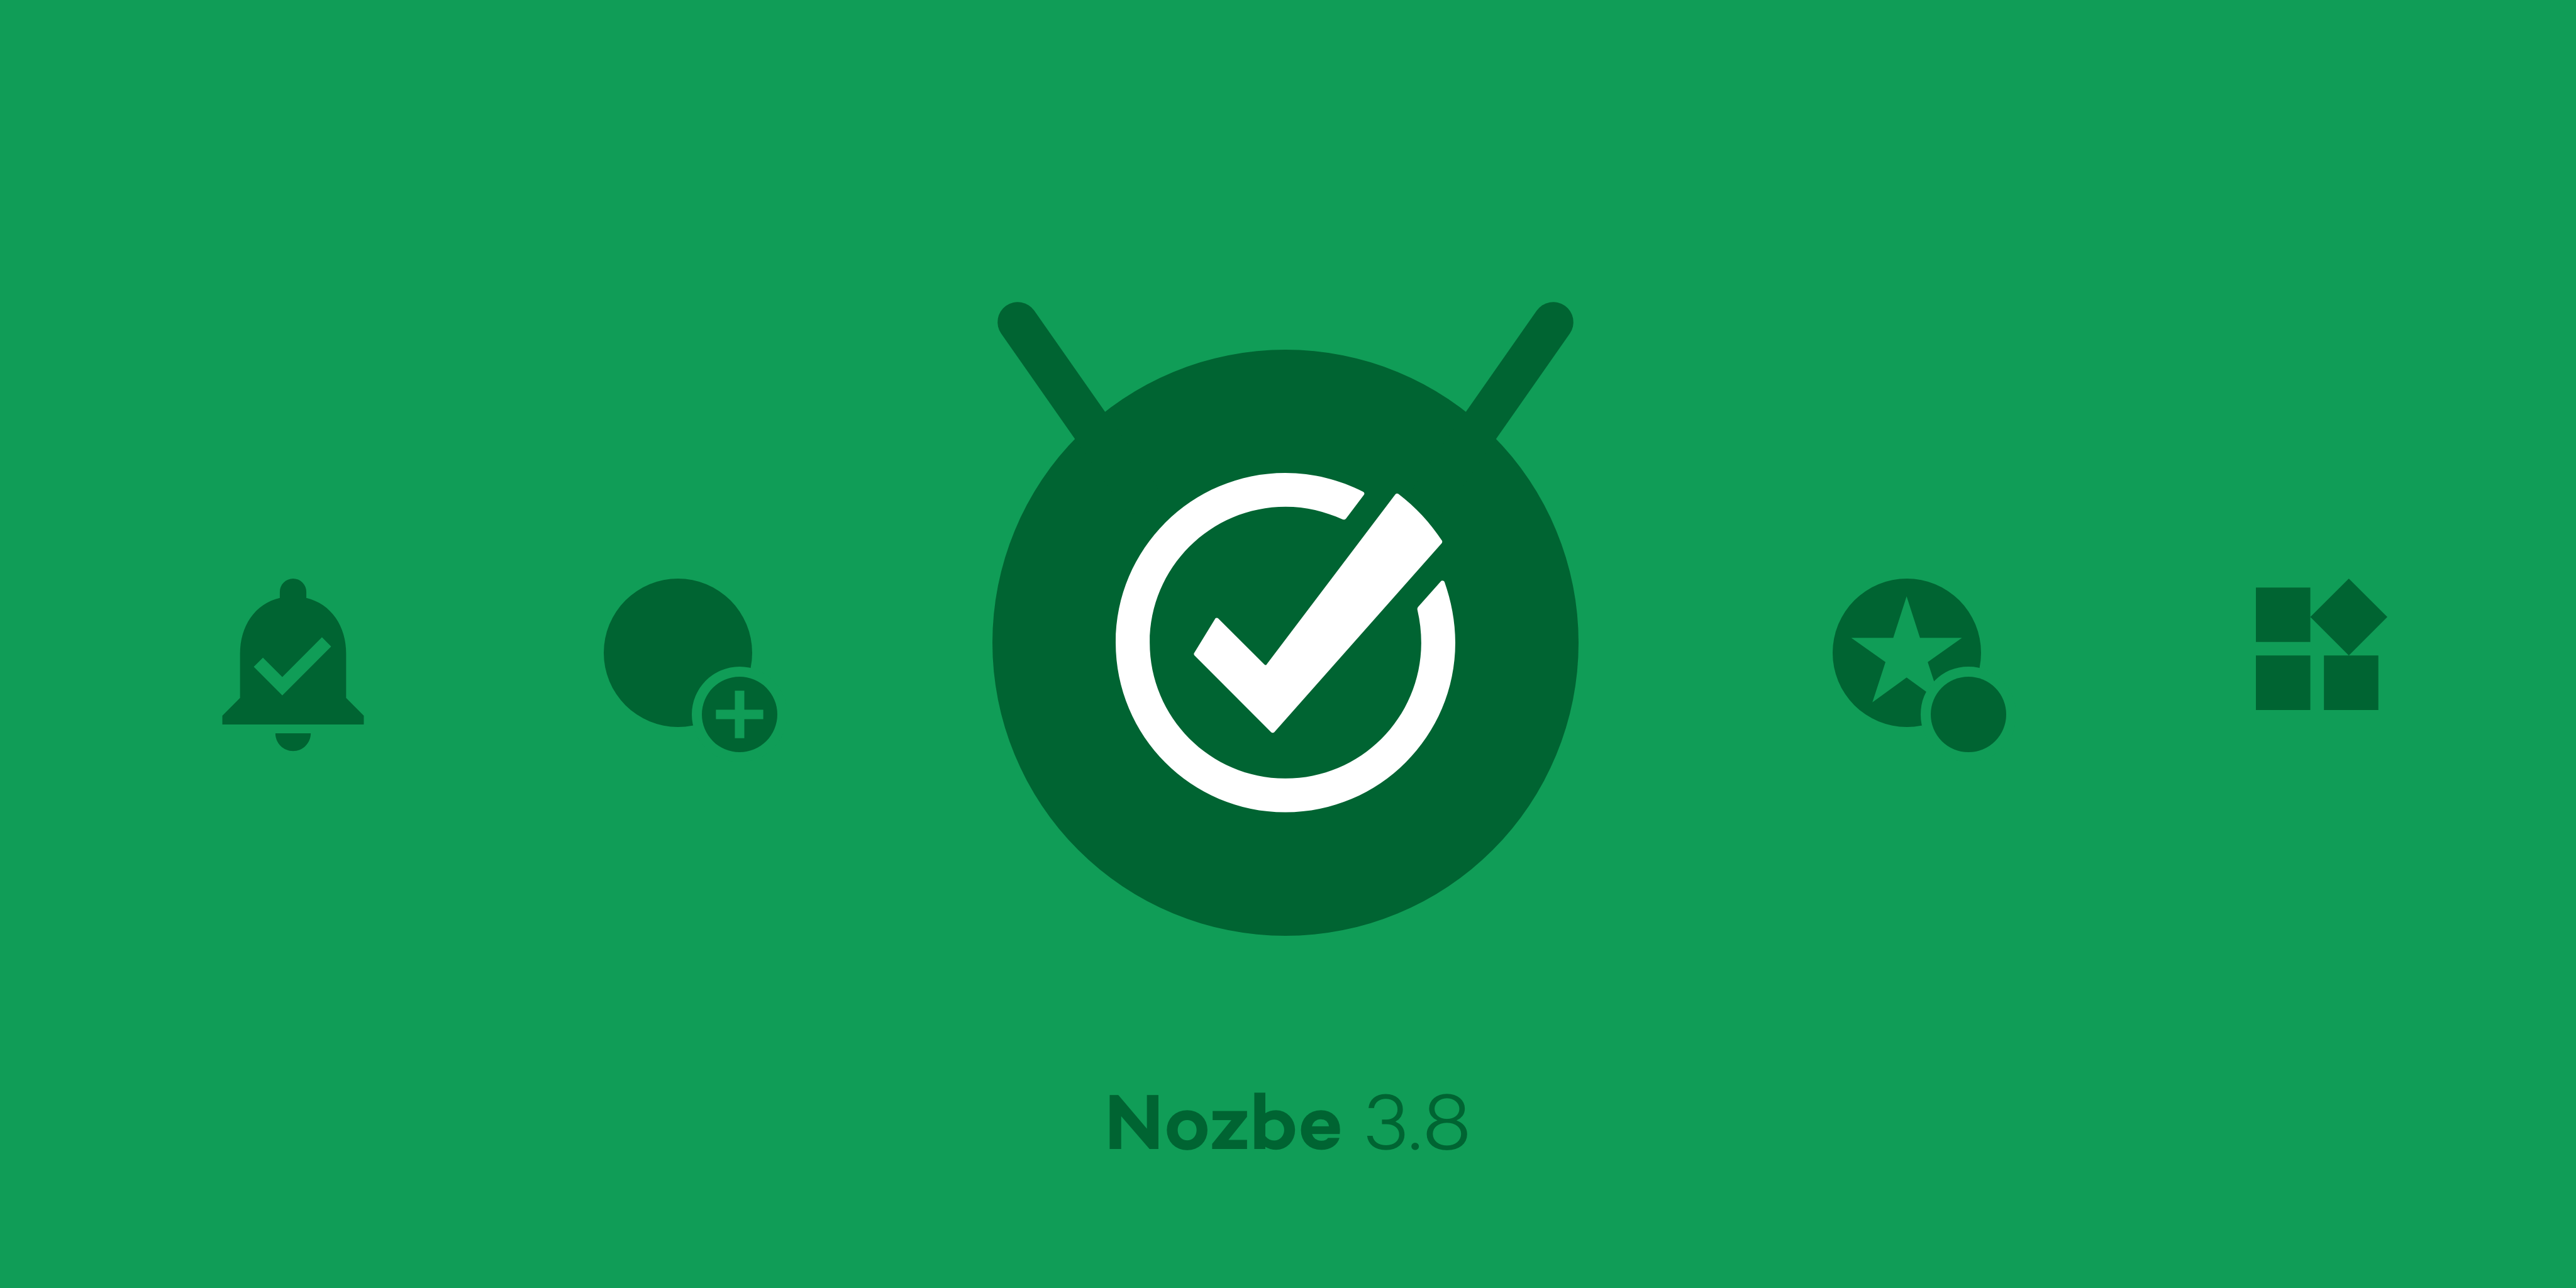 Brand new Nozbe 3.8